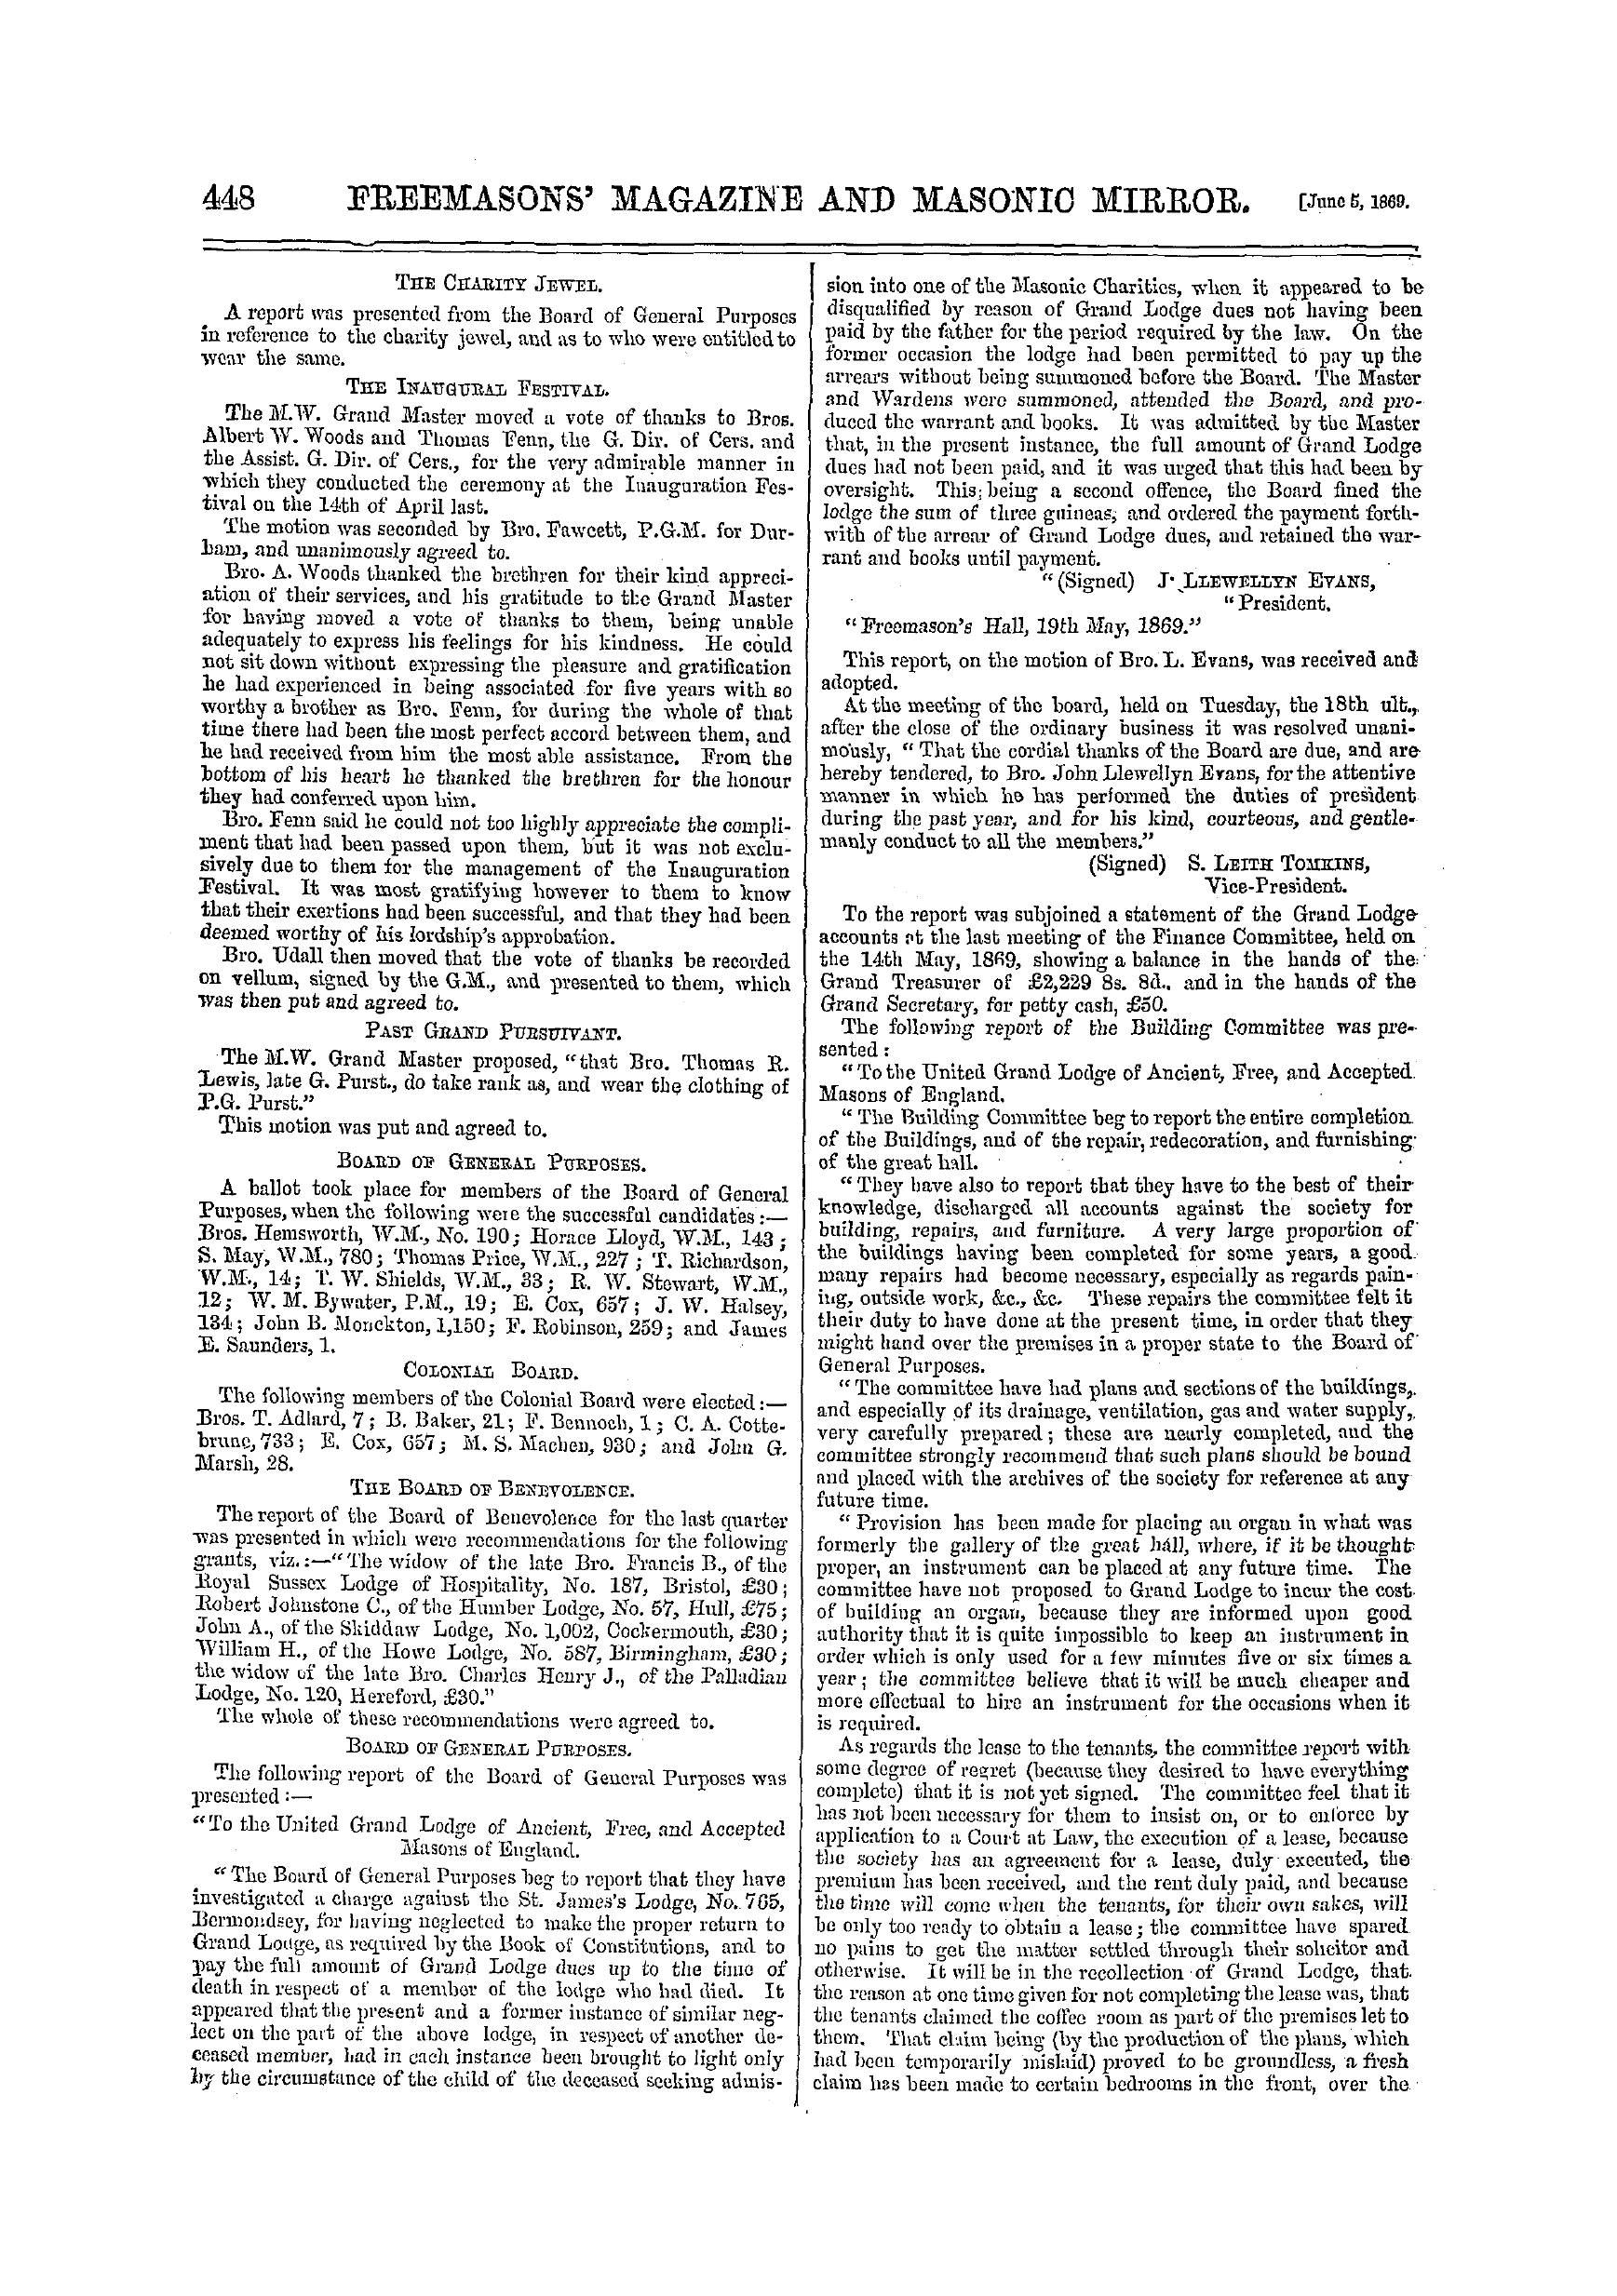 The Freemasons' Monthly Magazine: 1869-06-05 - Ar00900